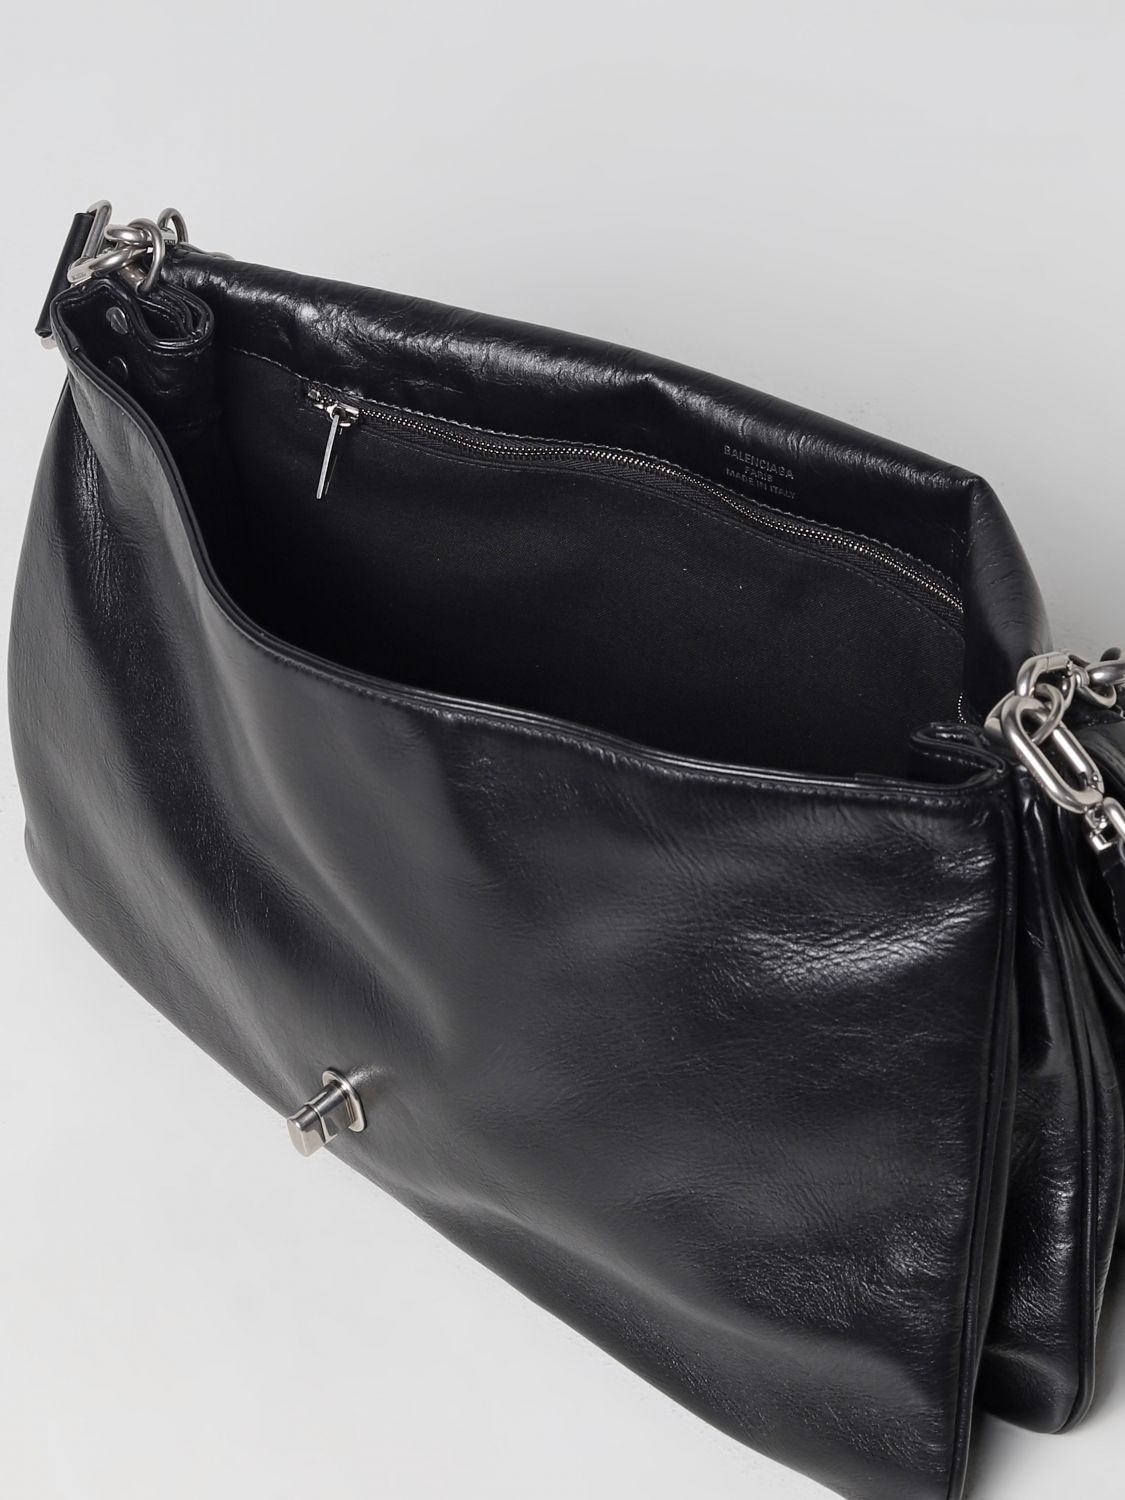 BALENCIAGA: bag in tumbled leather - Black  Balenciaga shoulder bag  7485962AAI4 online at